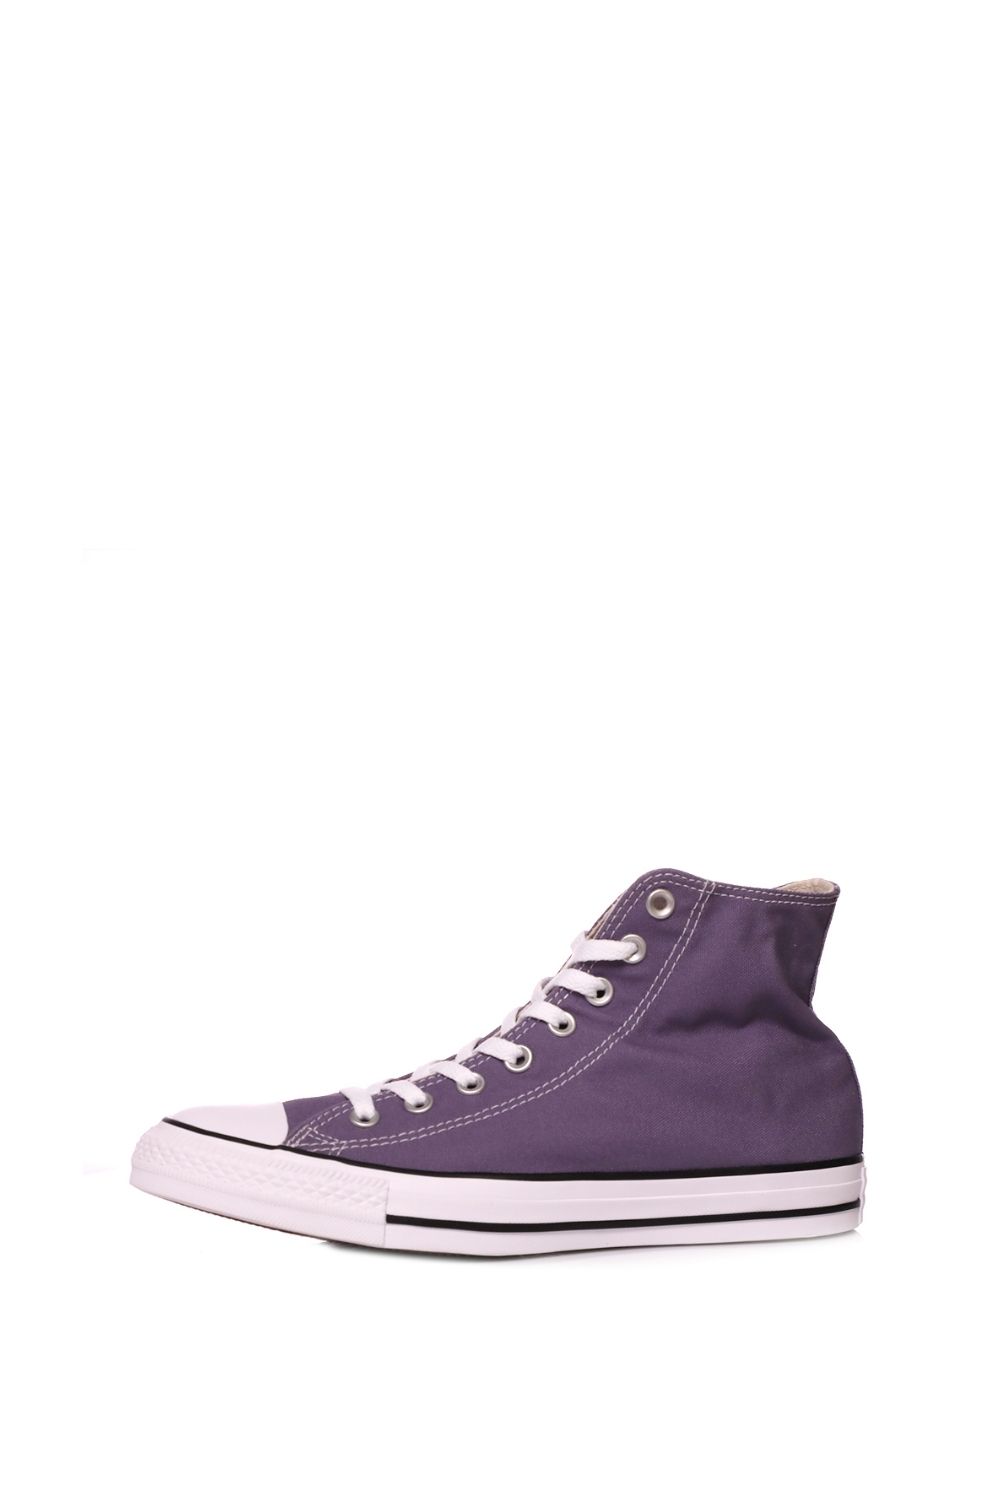 CONVERSE - Unisex παπούτσια Chuck Taylor All Star Hi μoβ Γυναικεία/Παπούτσια/Sneakers